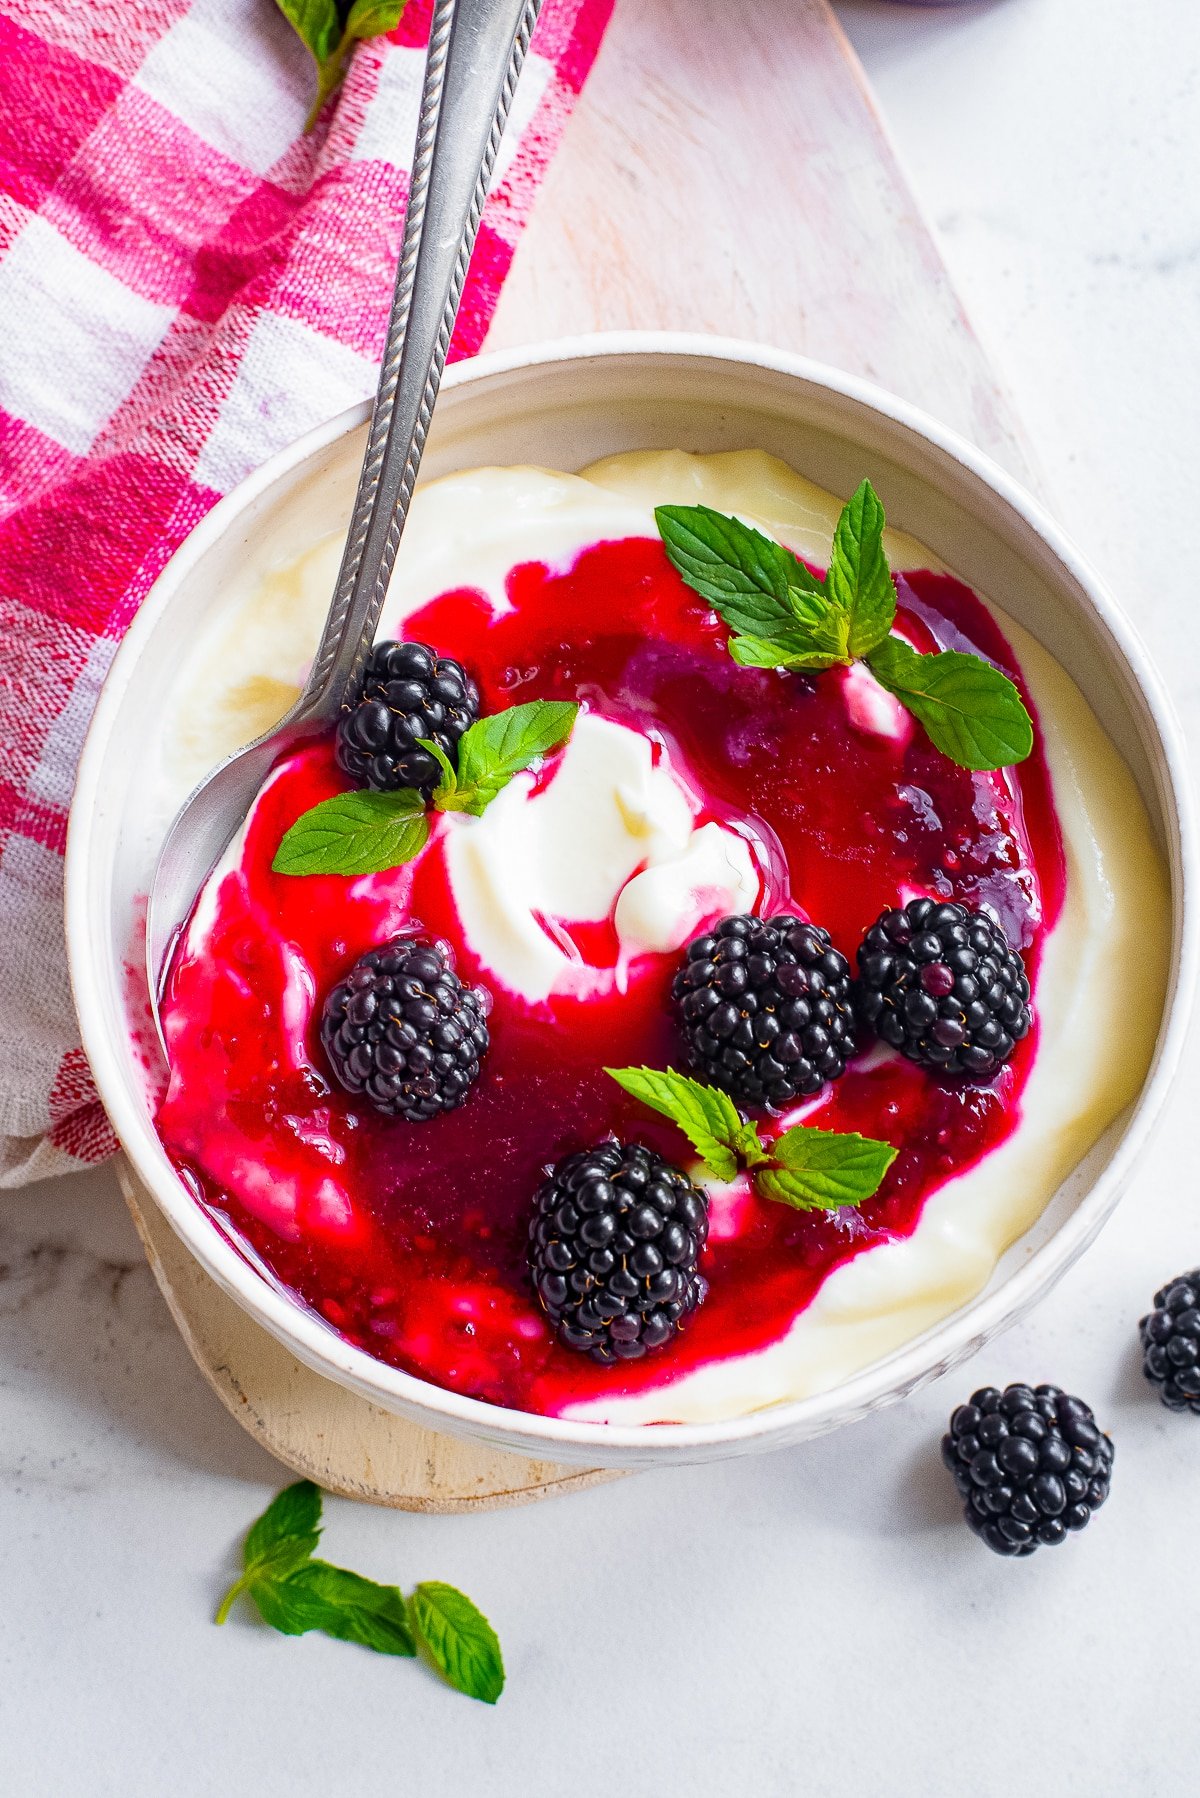 Overhead image of blackberry sauce on top of yogurt in a bowl